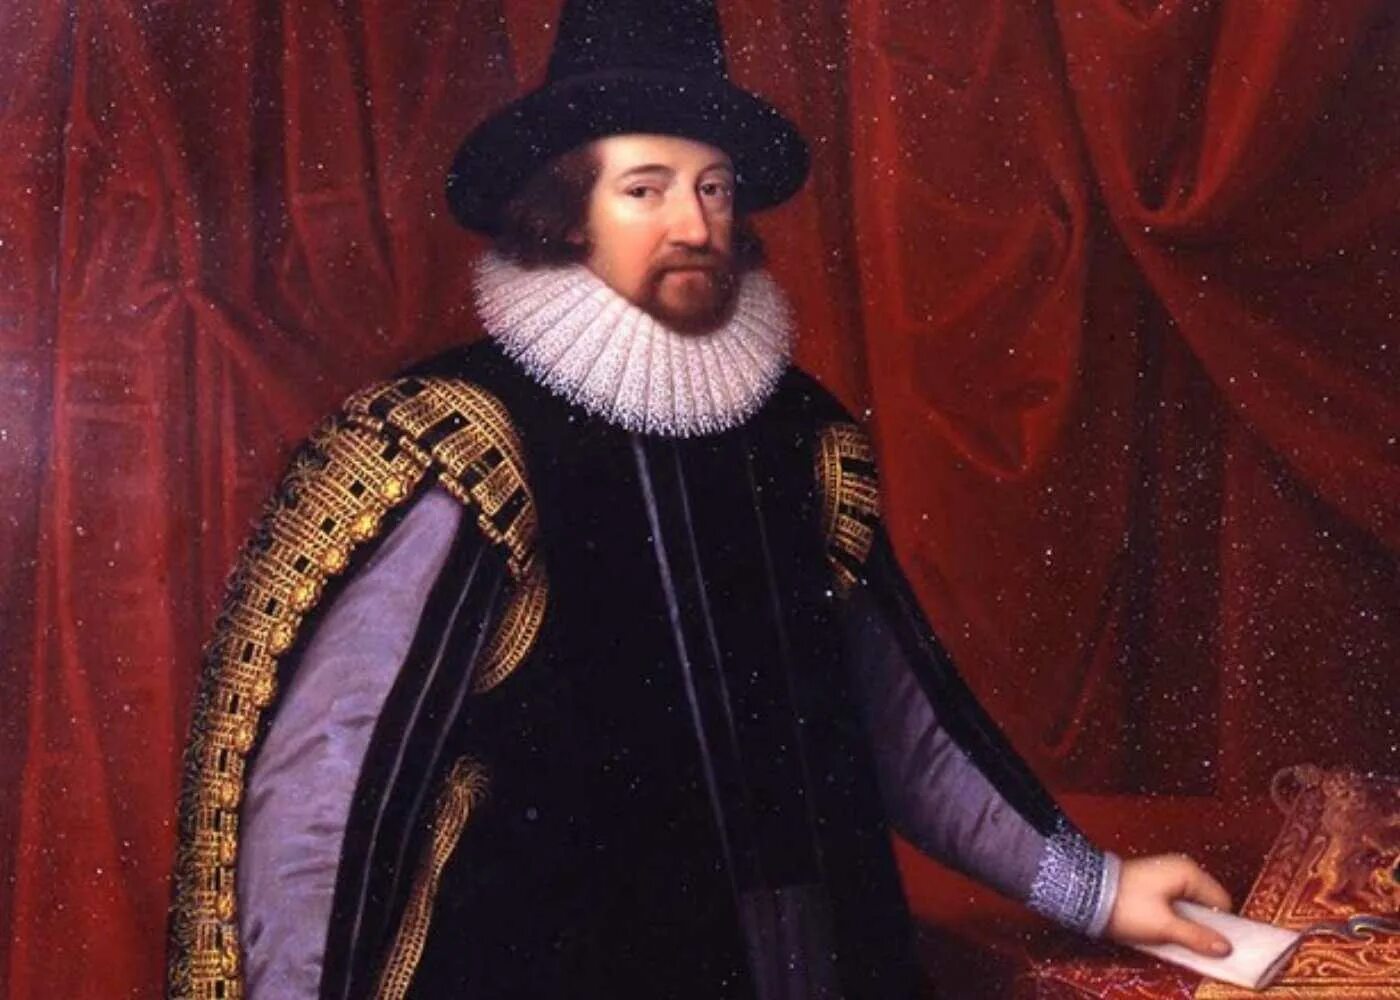 Ф. Бэкон (1561-1626). Fensis bekon (1561-1626). Фрэнсис Бэкон. Фрэнсис Бэкон (1561-1626 гг.).